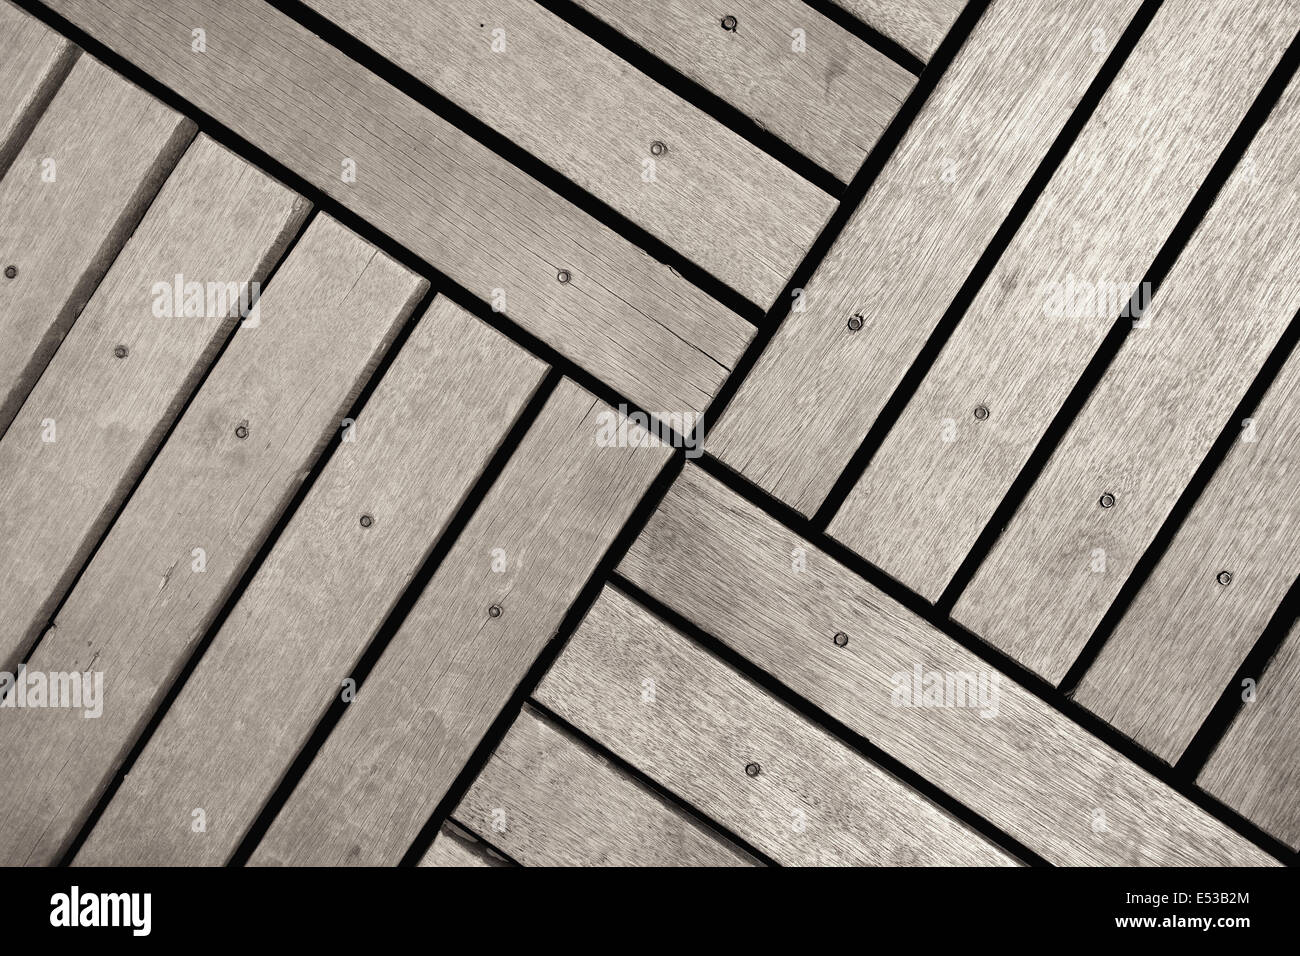 Wood floor background texture Stock Photo